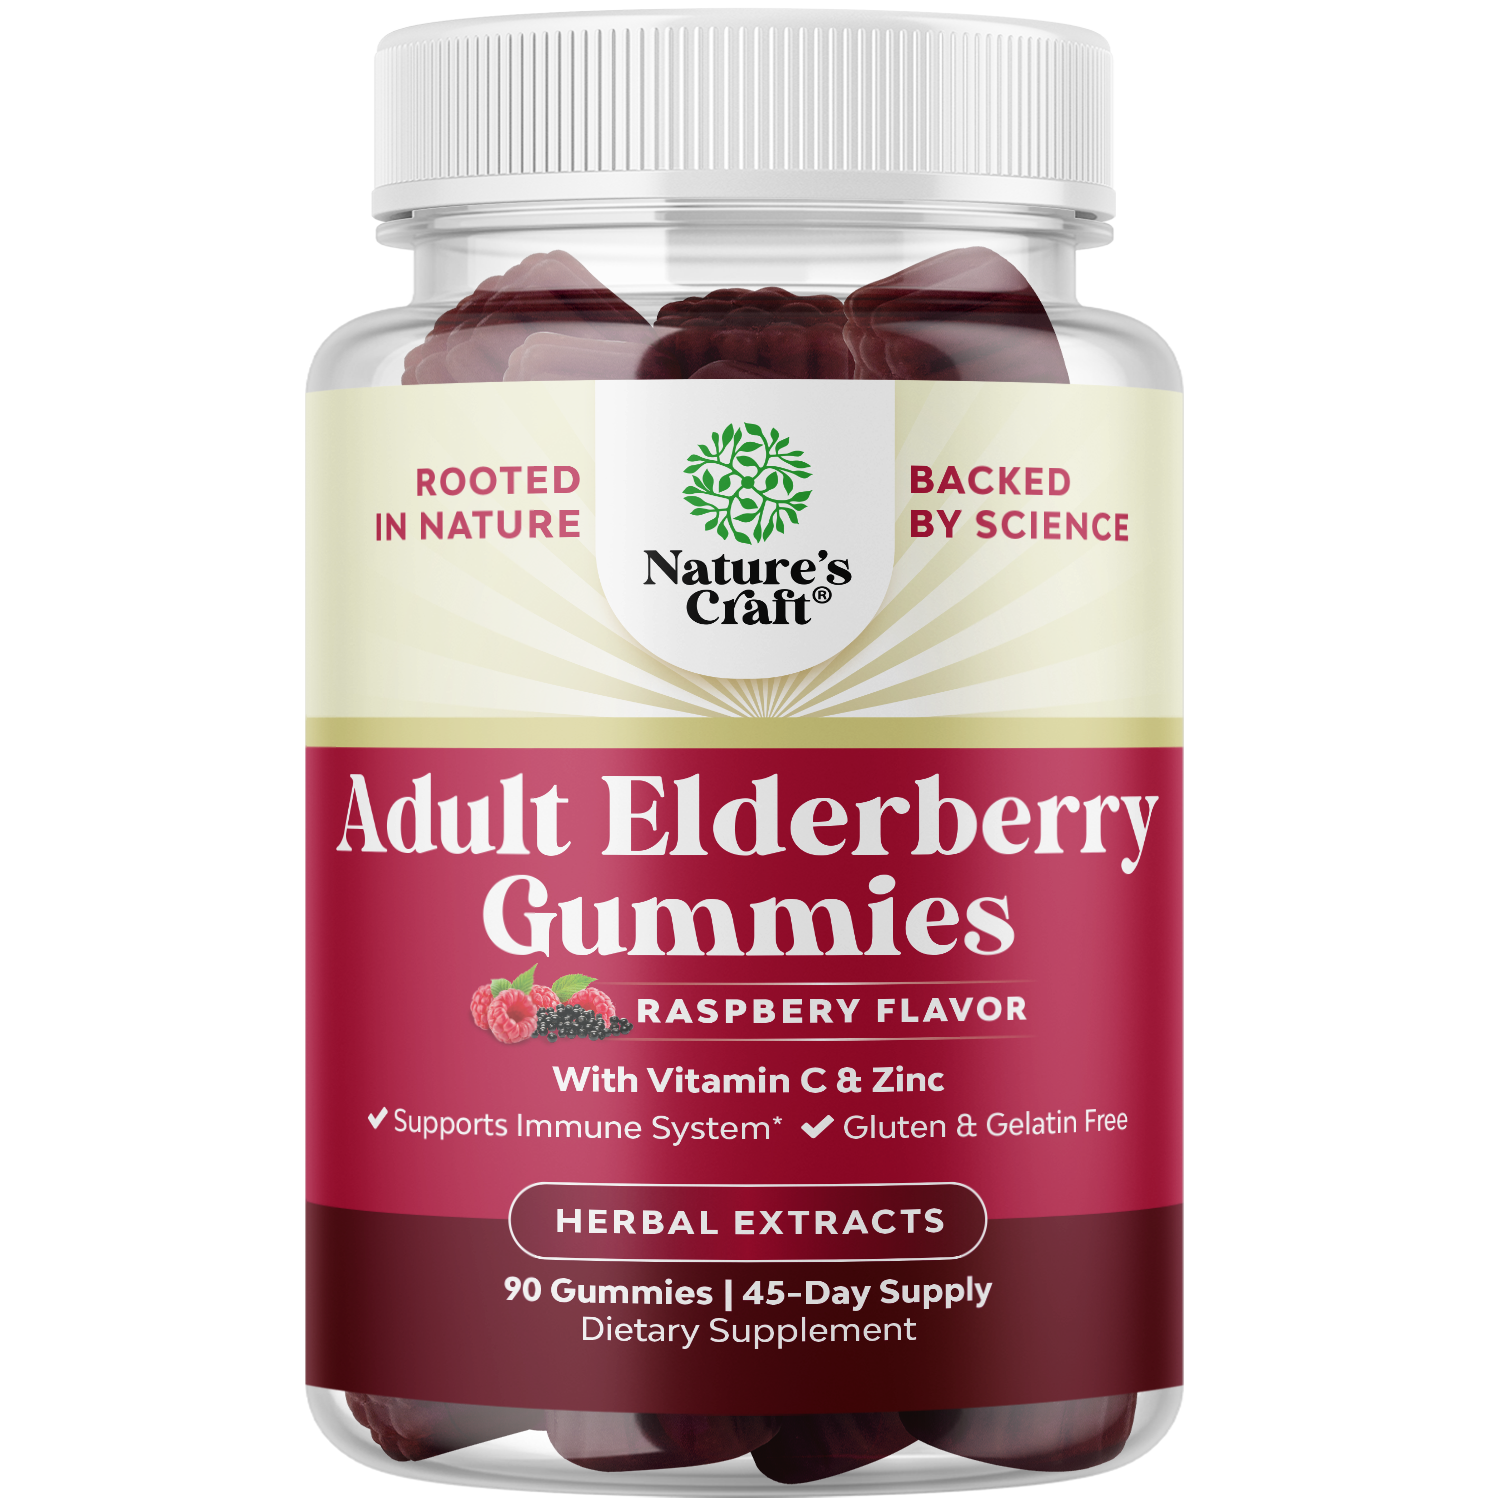 Adult Elderberry Gummies - 90 Gummies